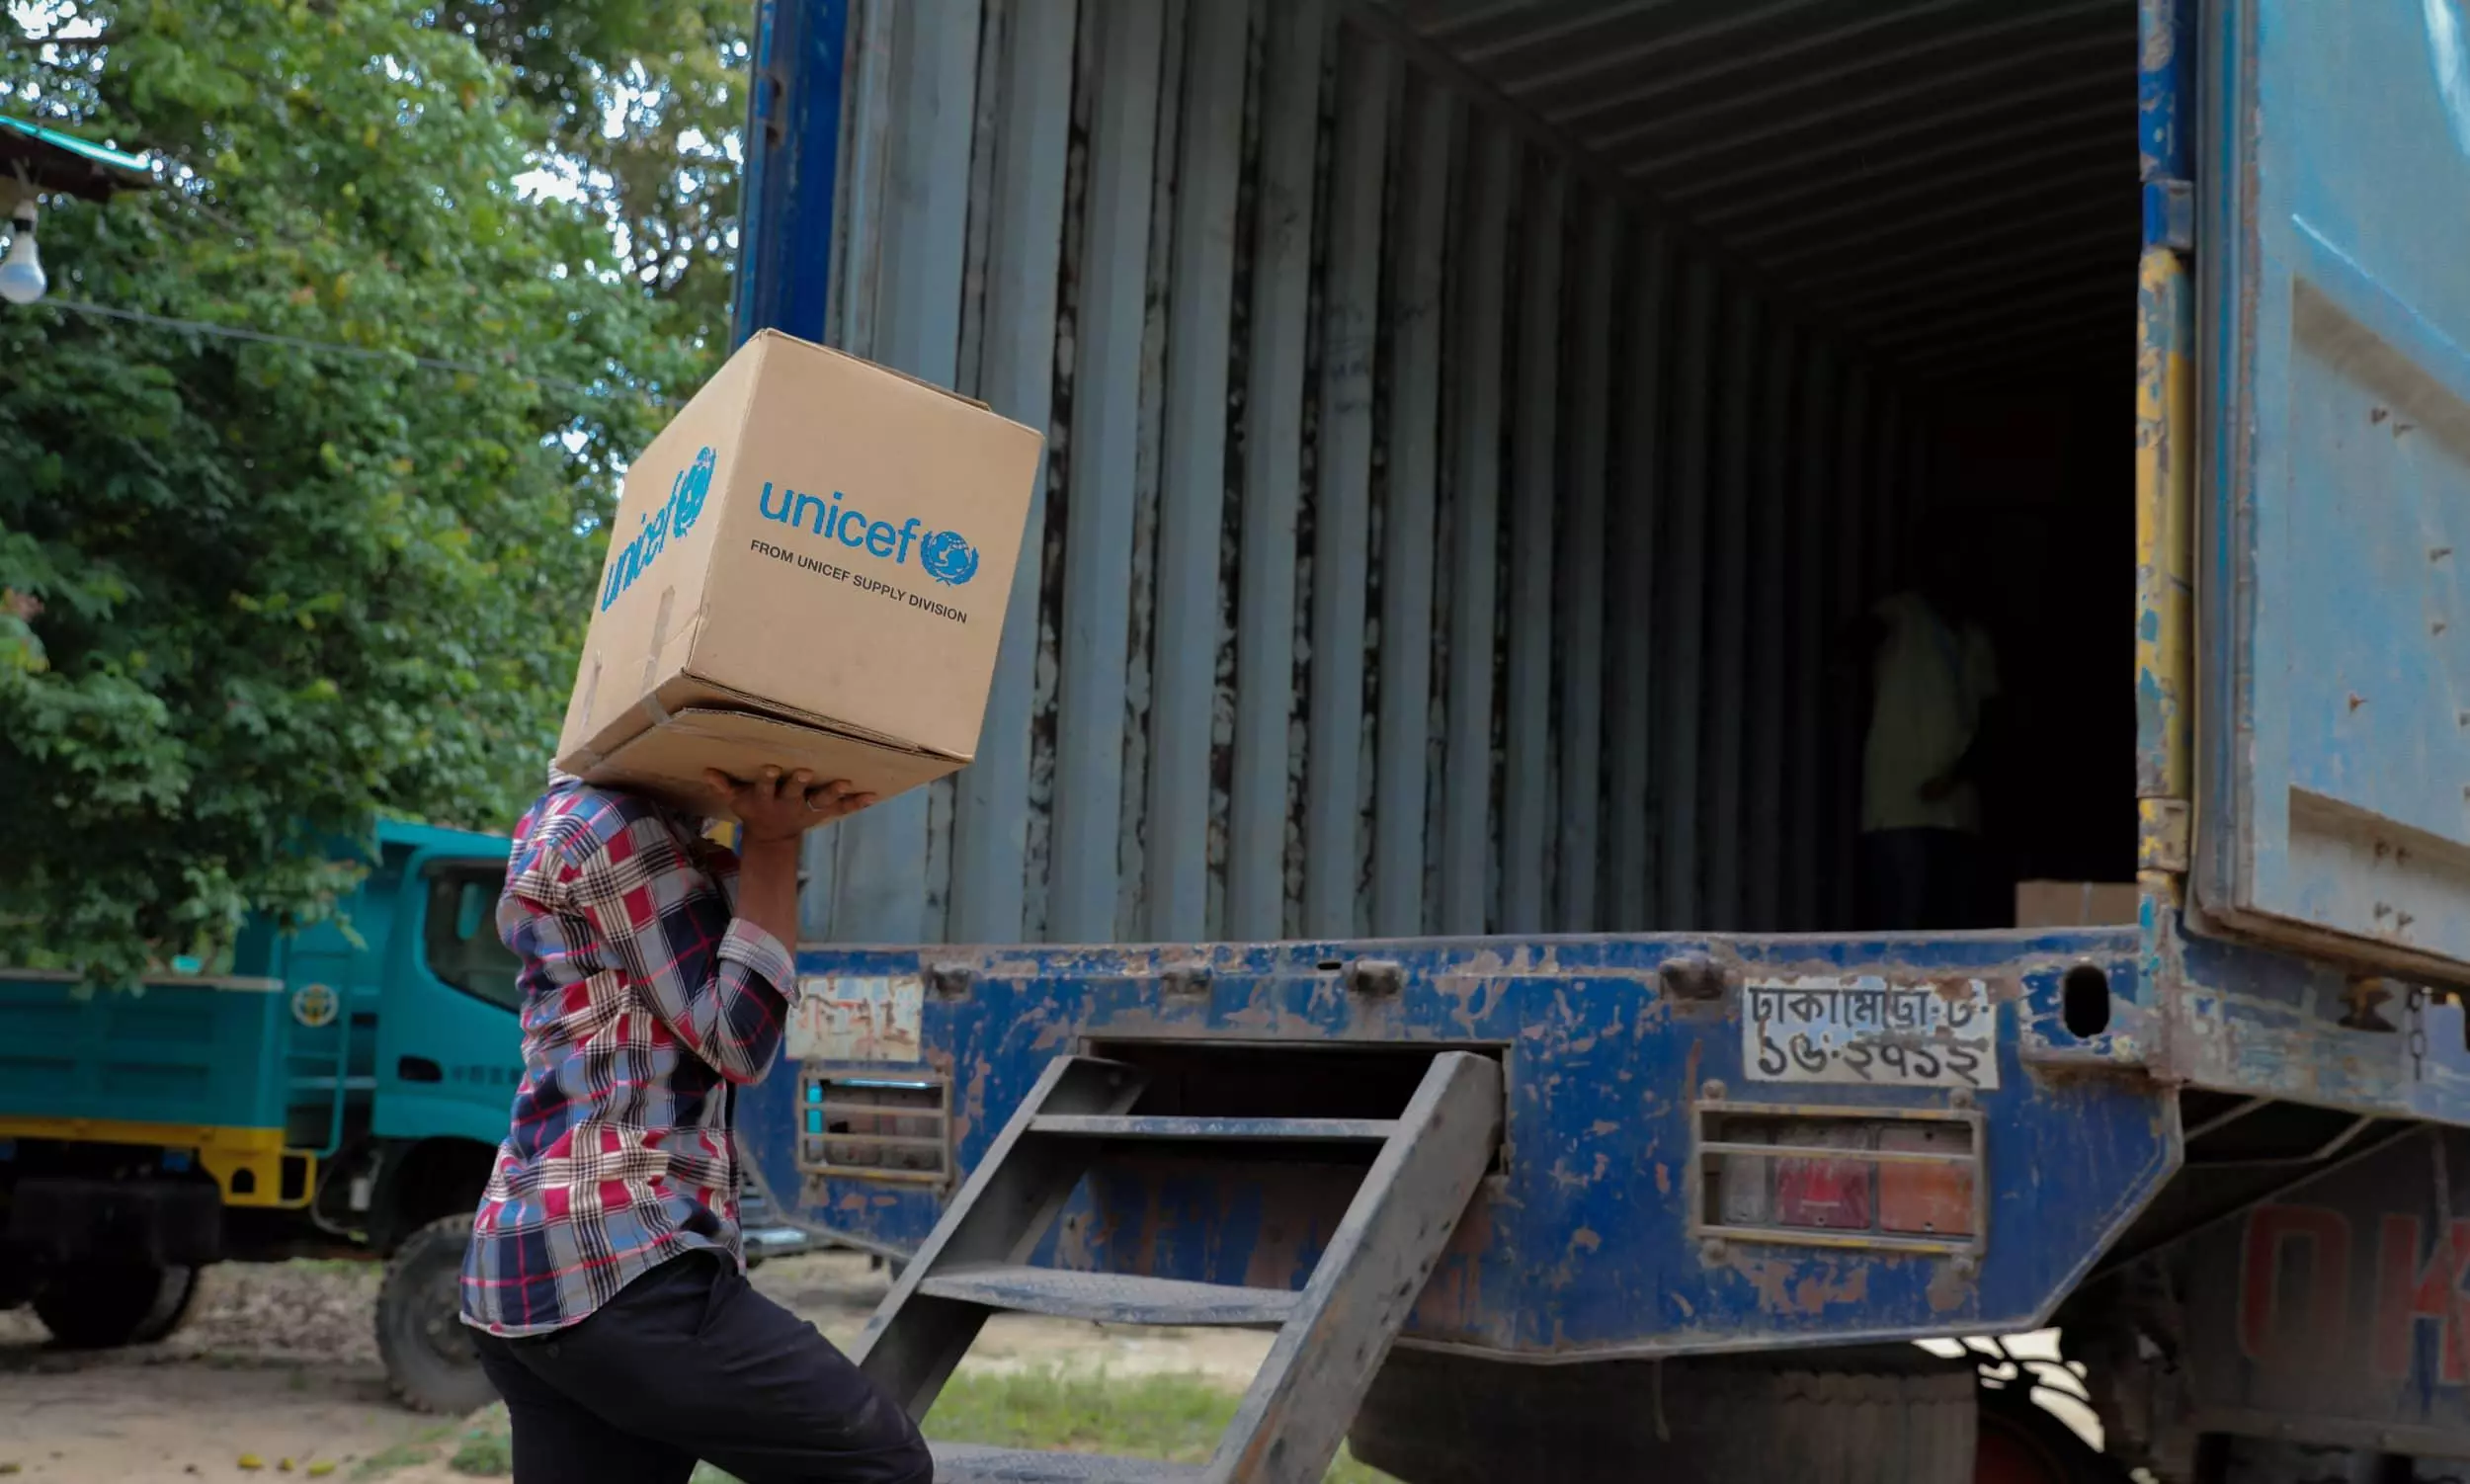 Flexport.org, Unicef announce humanitarian aid deal